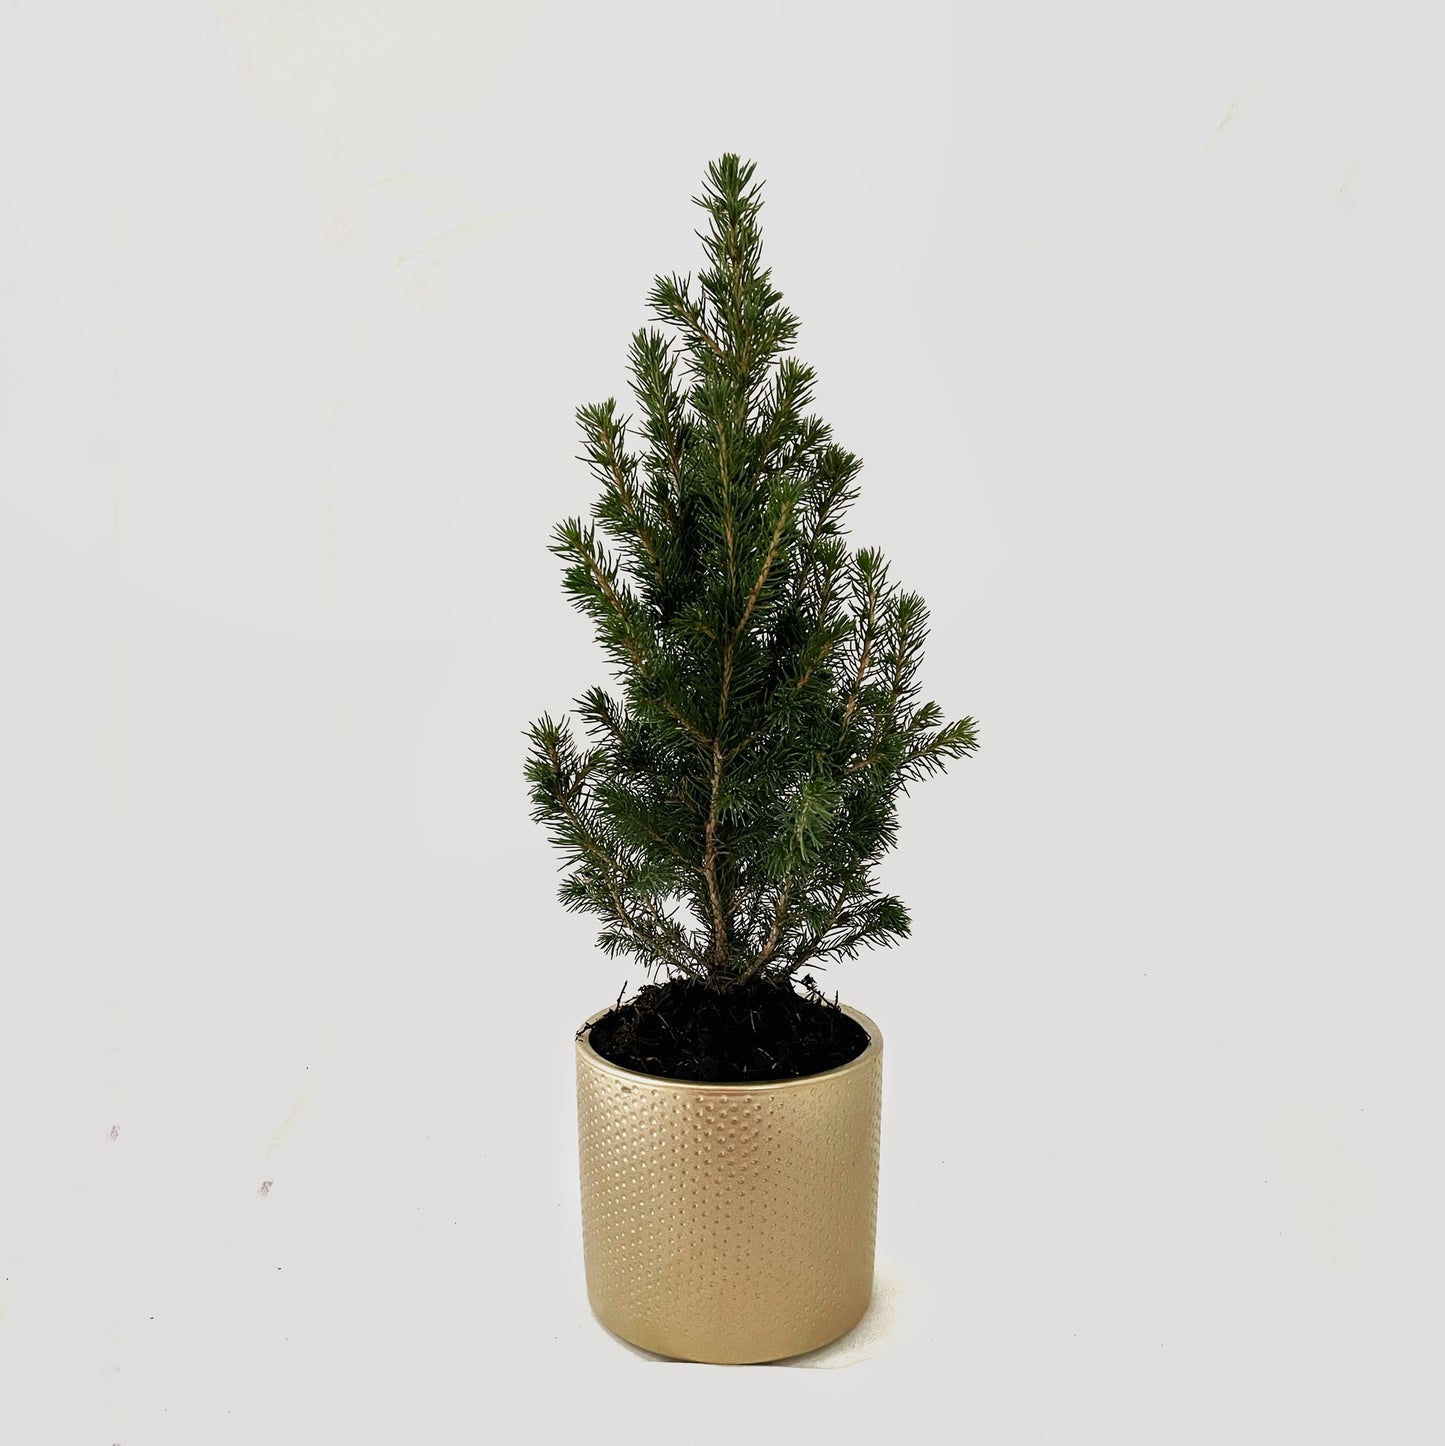 Picea glauca conica - Dwarf Alberta Spruce Tree